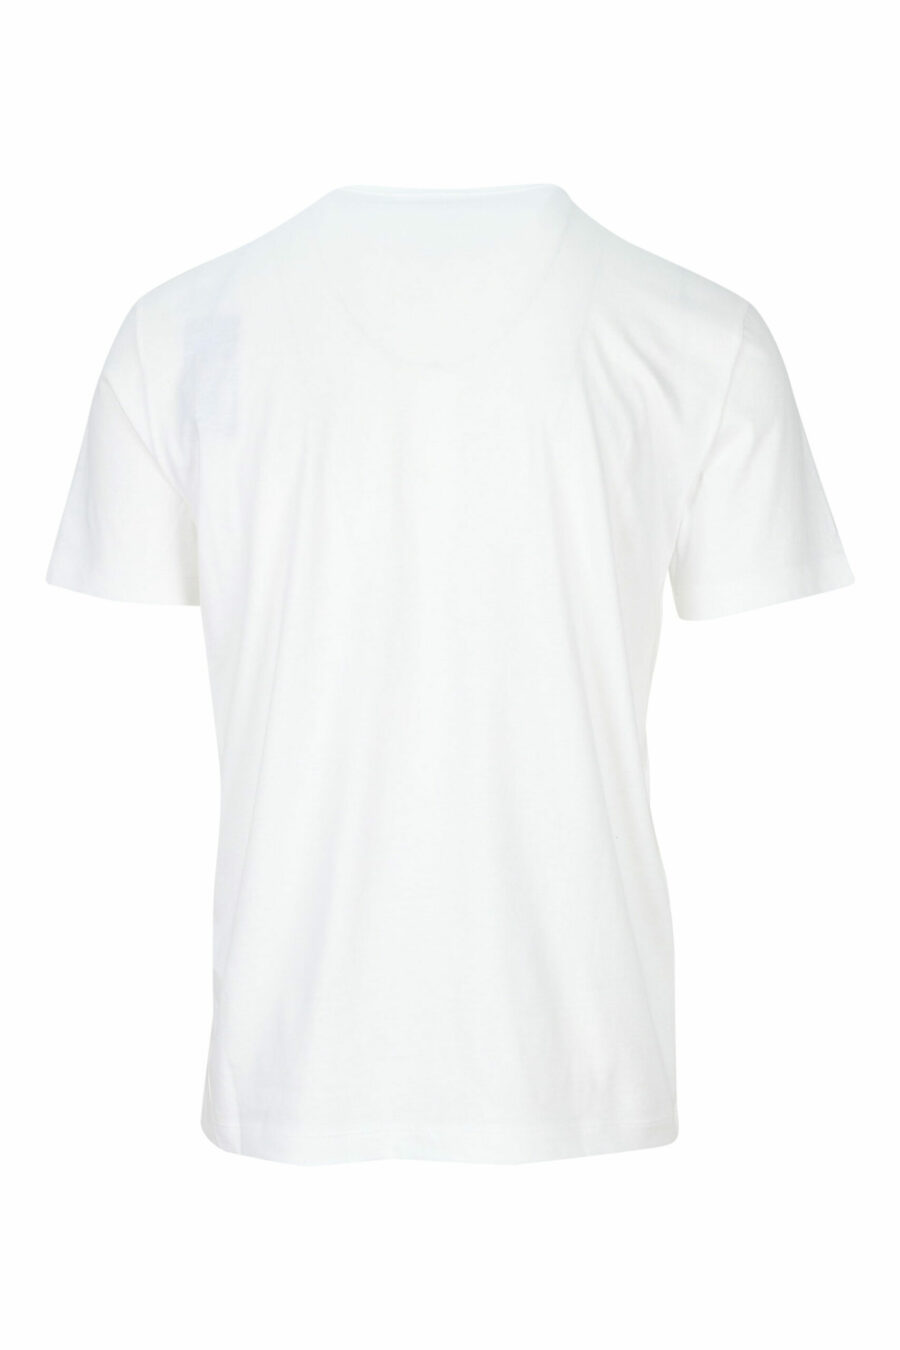 Camiseta blanca con maxilogo negro "lux identity" - 8057767688486 1 scaled